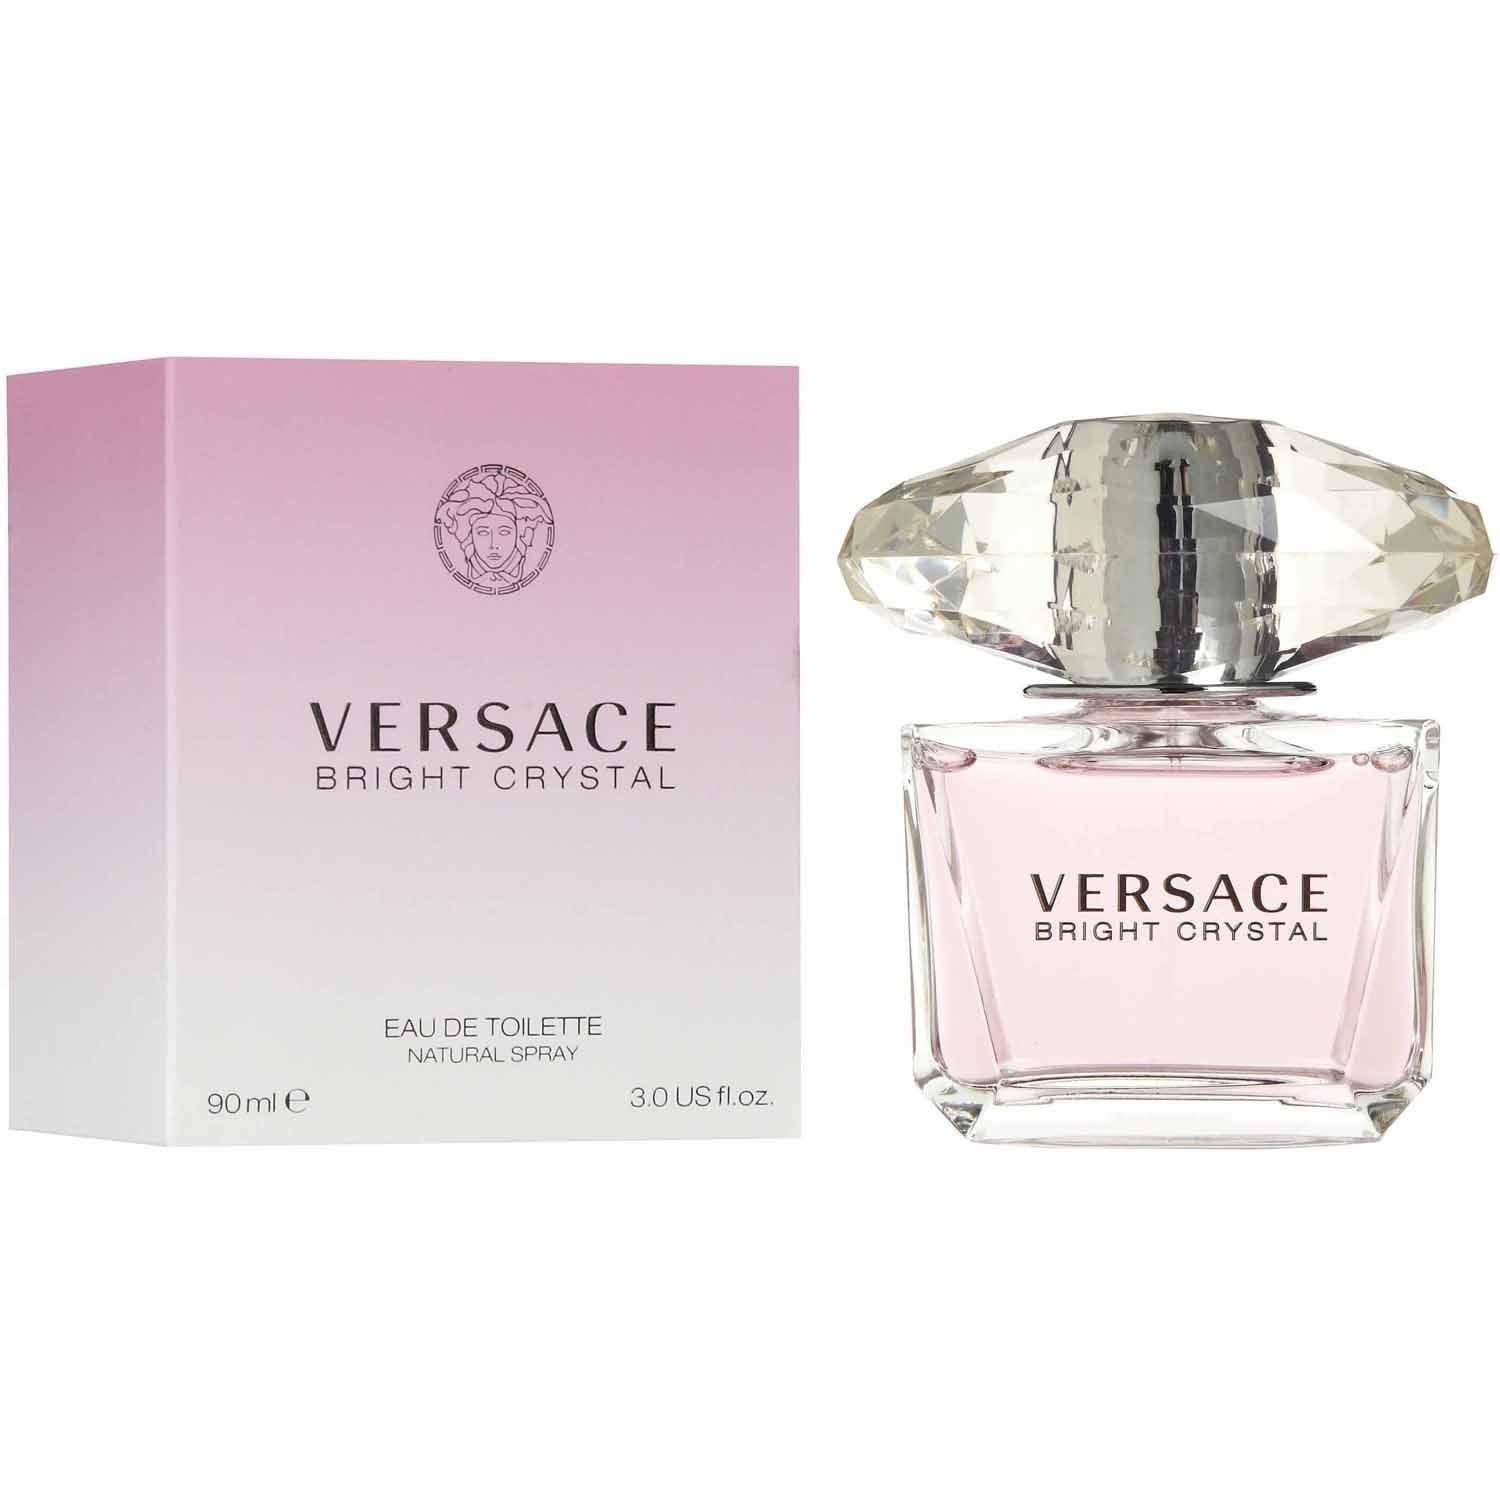 versace perfume bright crystal